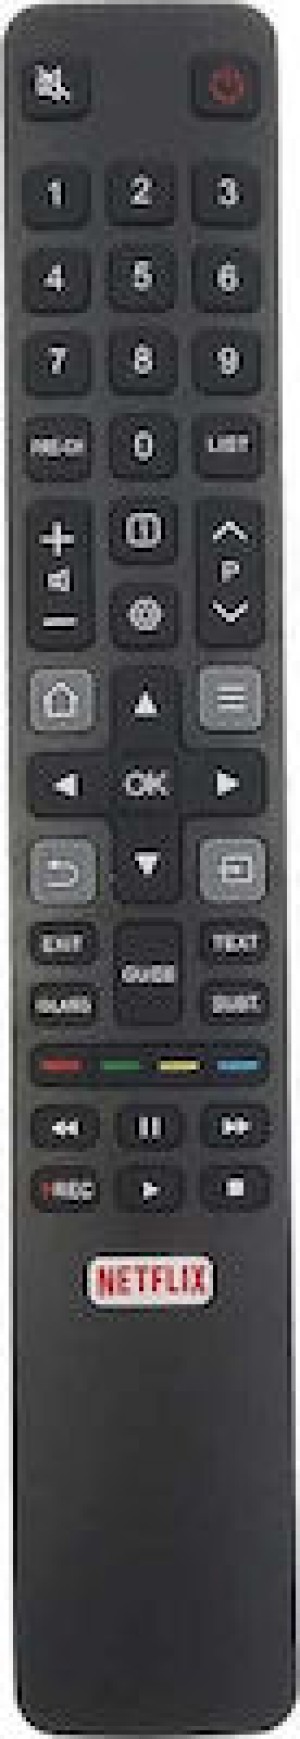 Control remoto compatible con OEM L1508 TCL/Thomson para televisores TCL y Thomson